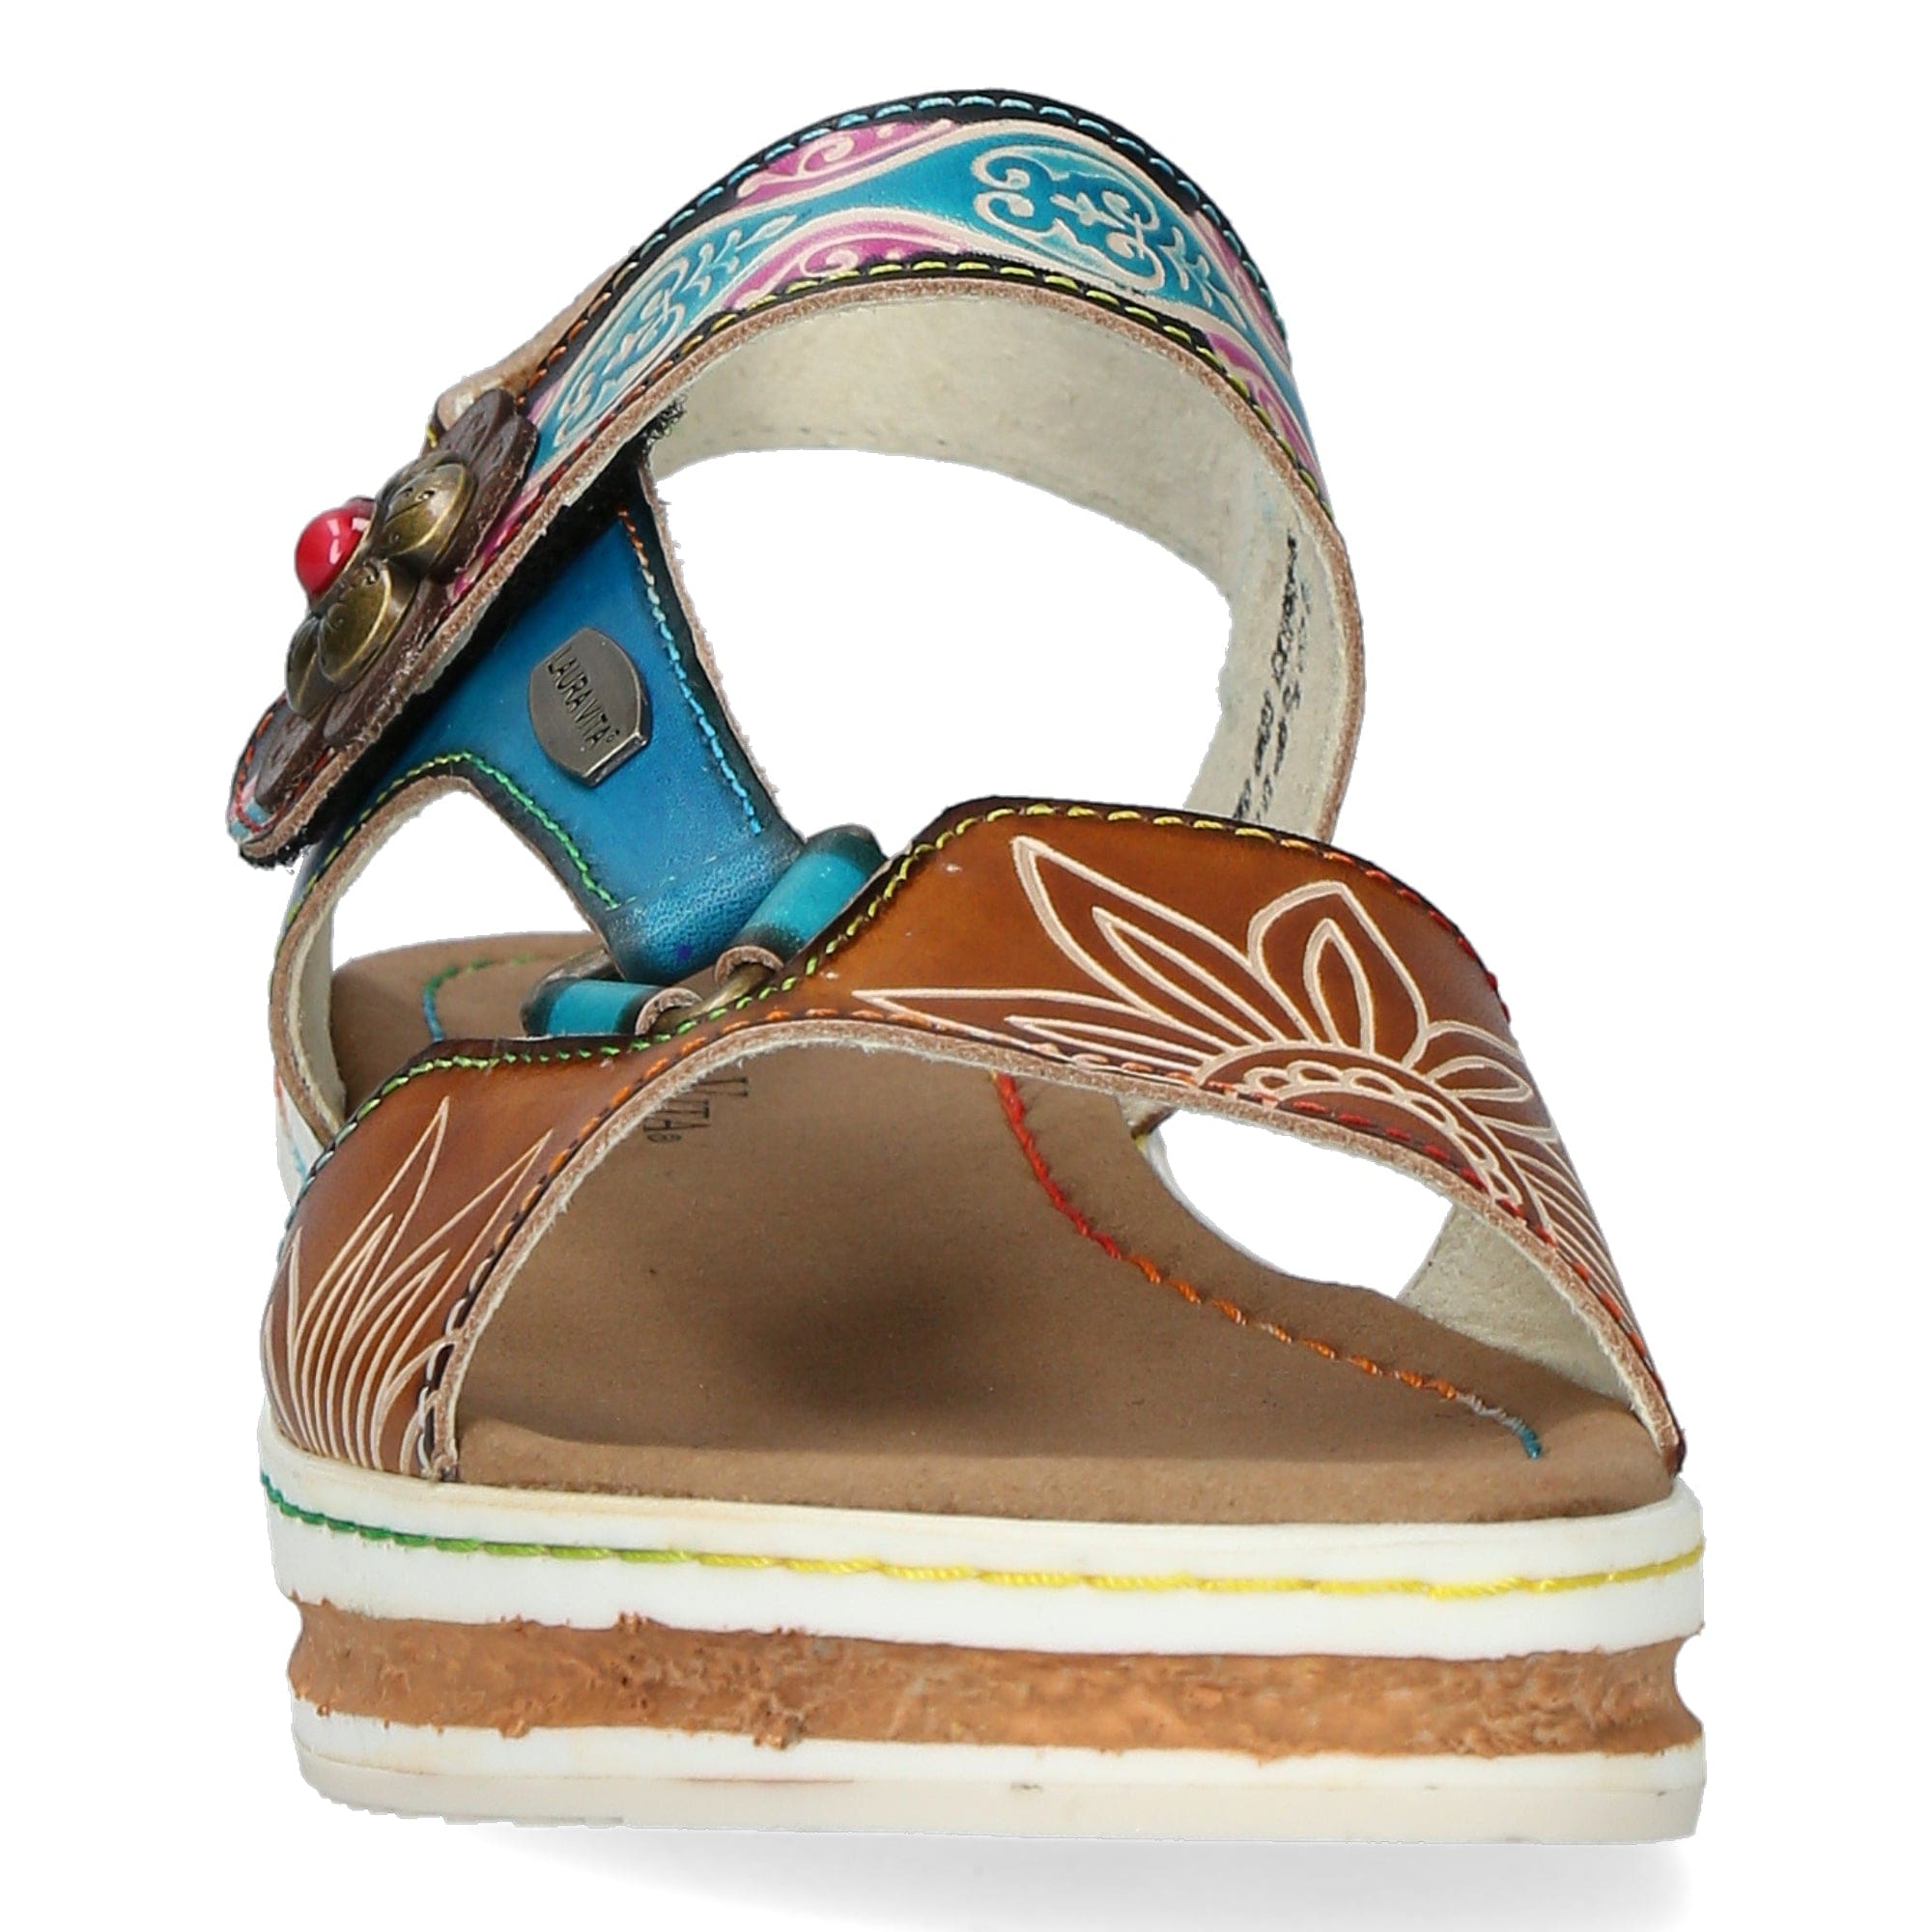 Chaussure DICEZEO 0623 - Sandale